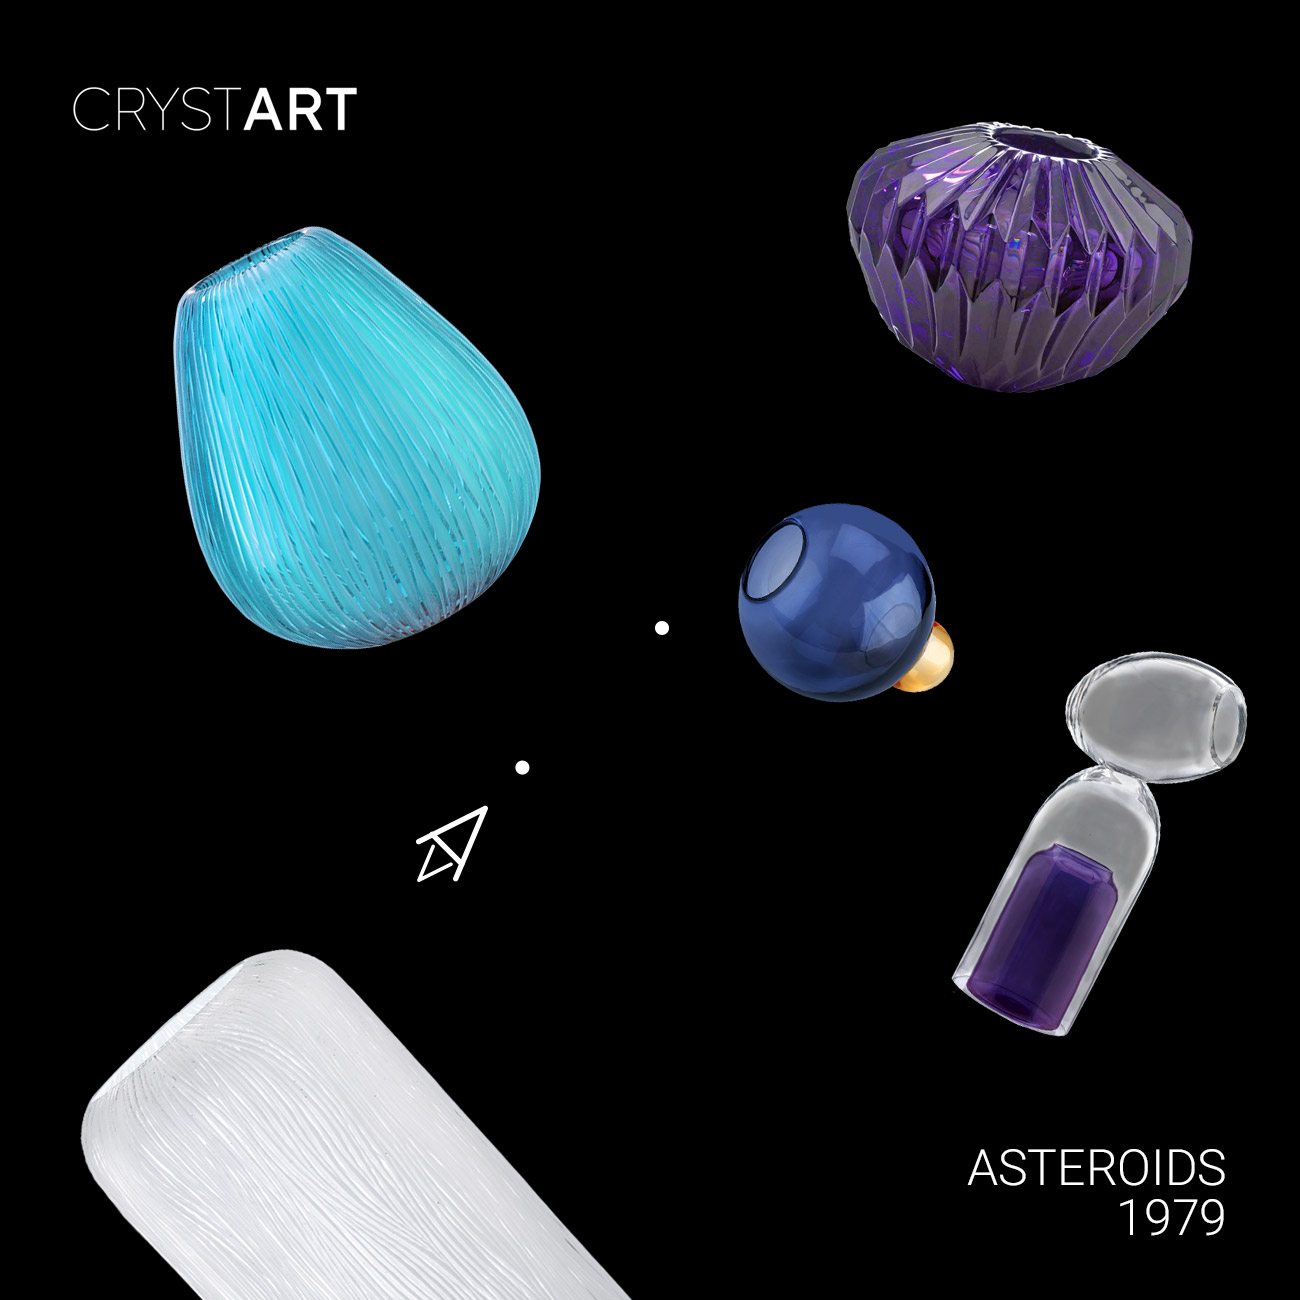 1979asteroids crystal crystart